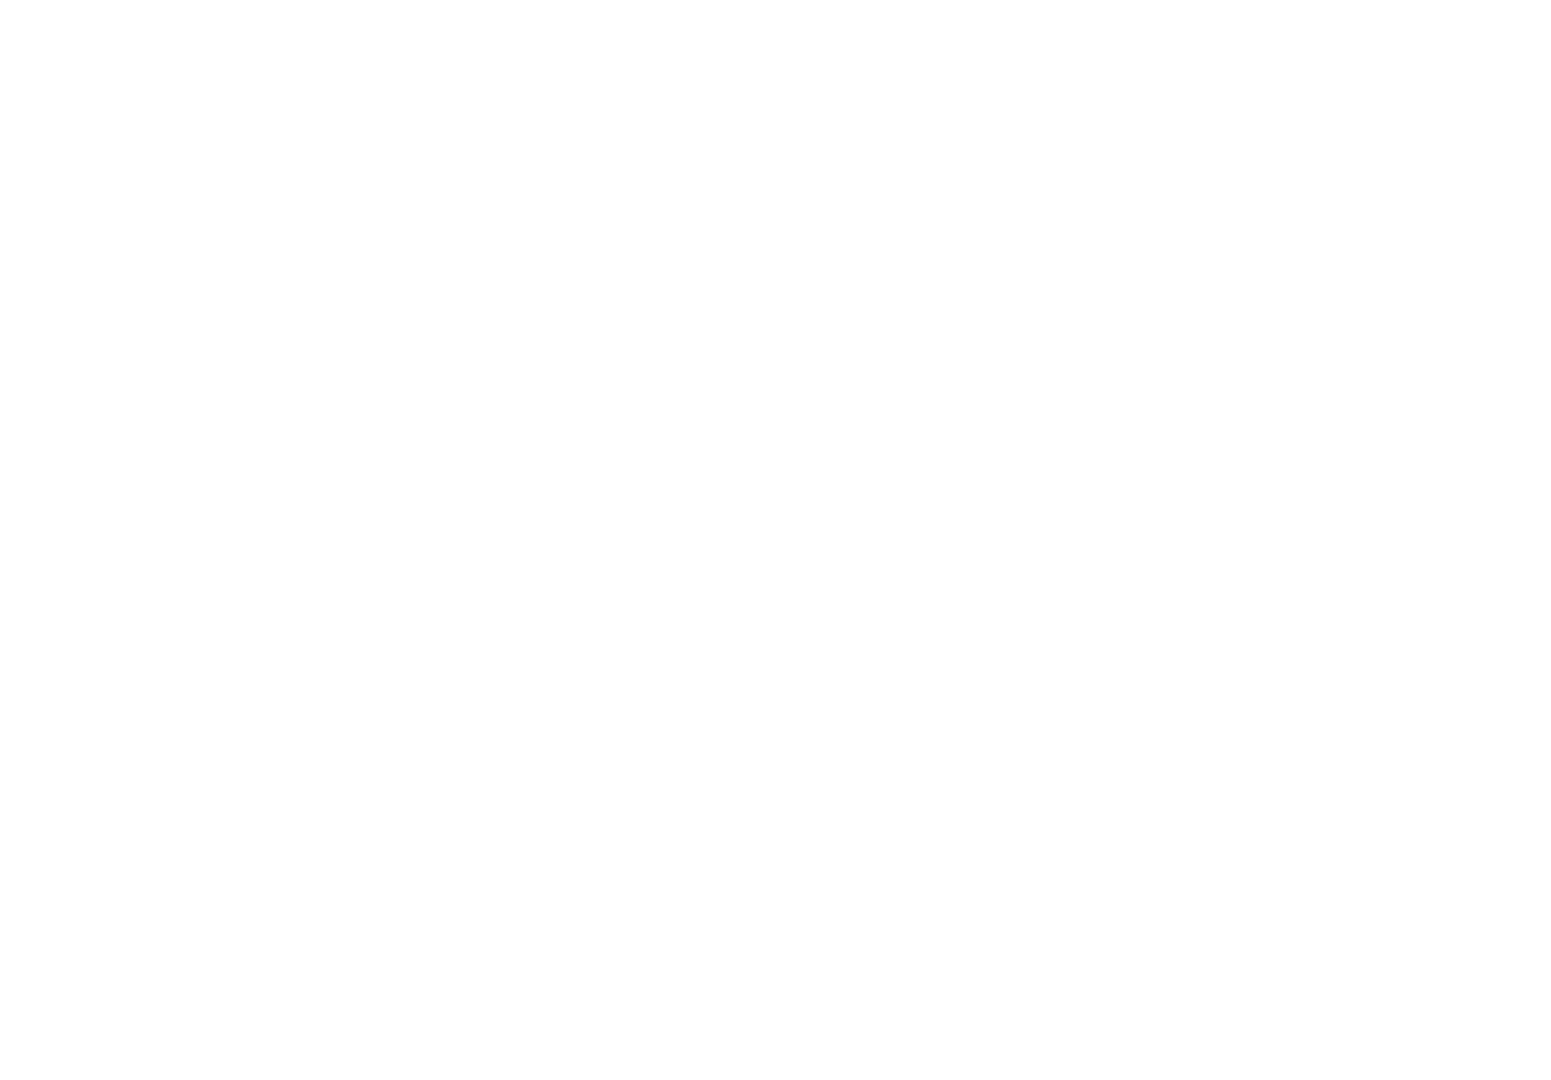 NFTY Rebuild 2021